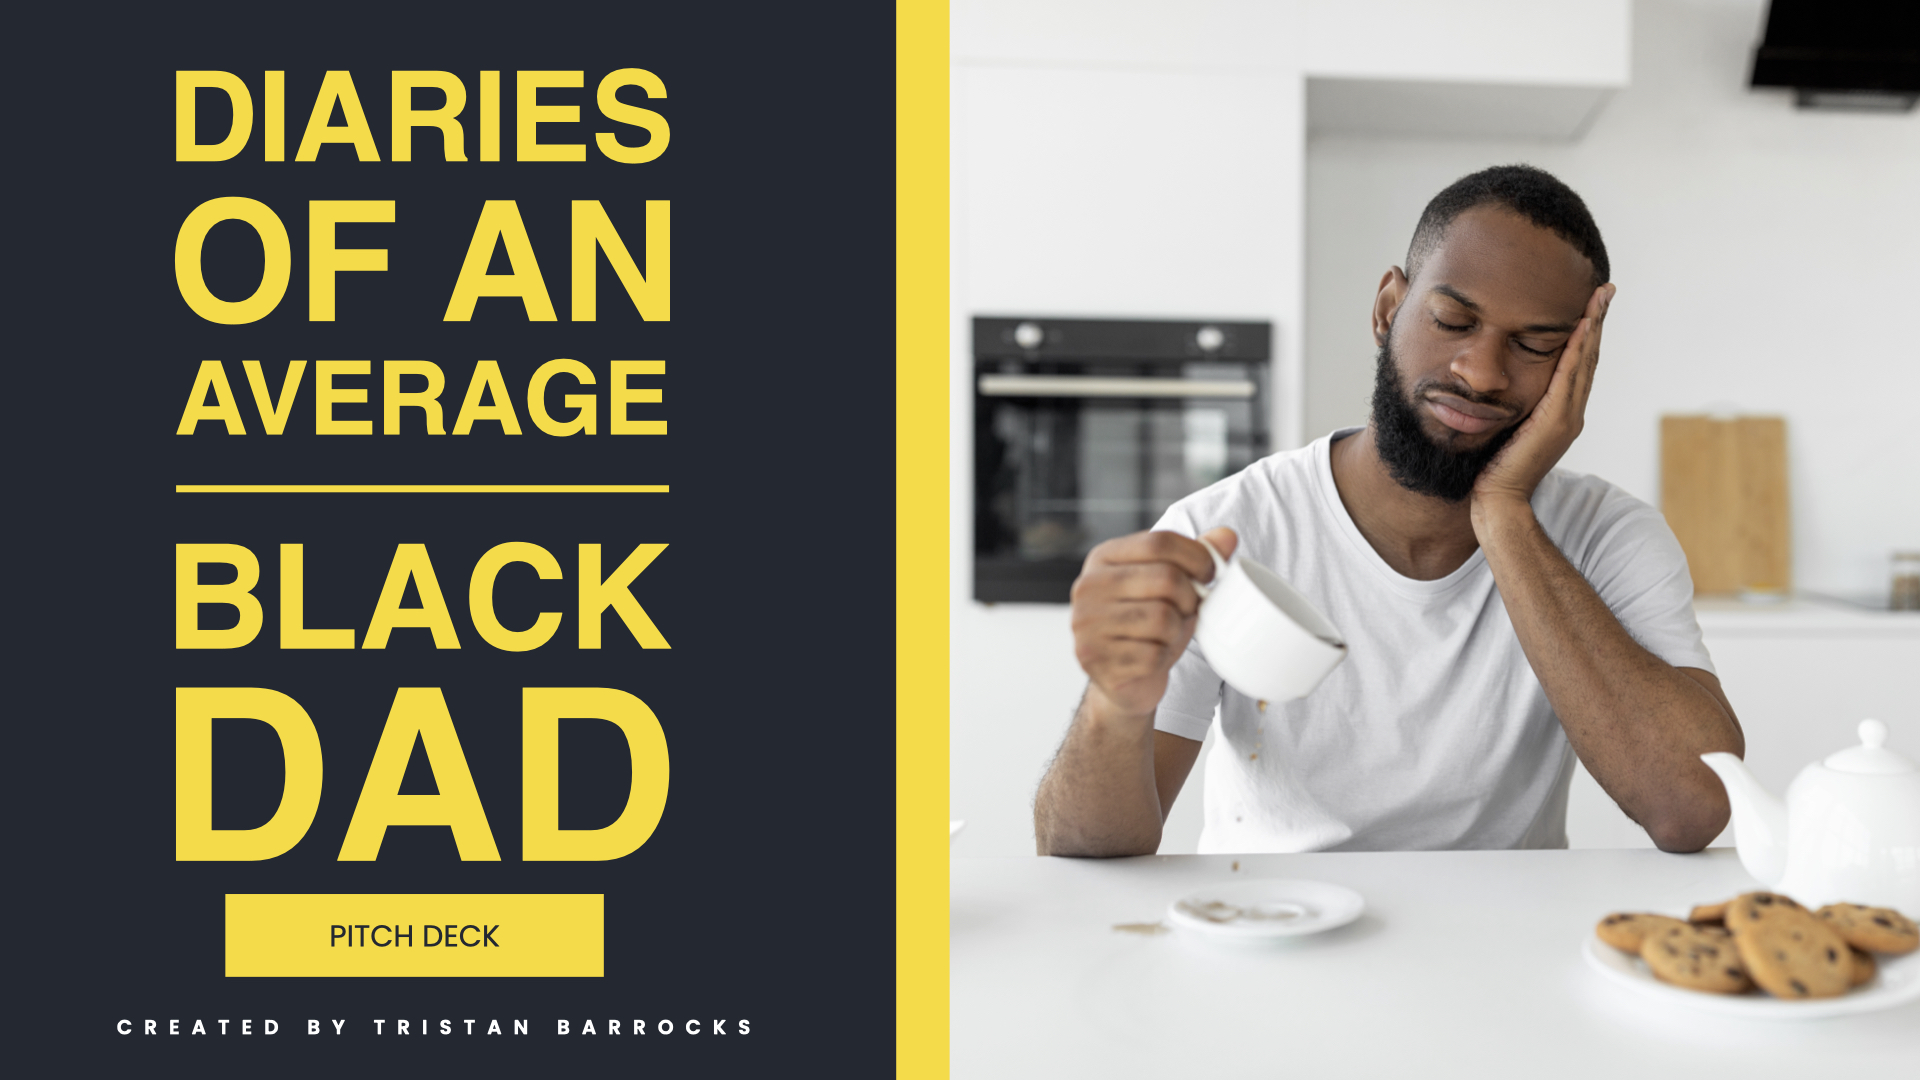 DIARIES OF AN AVERAGE BLACK DAD